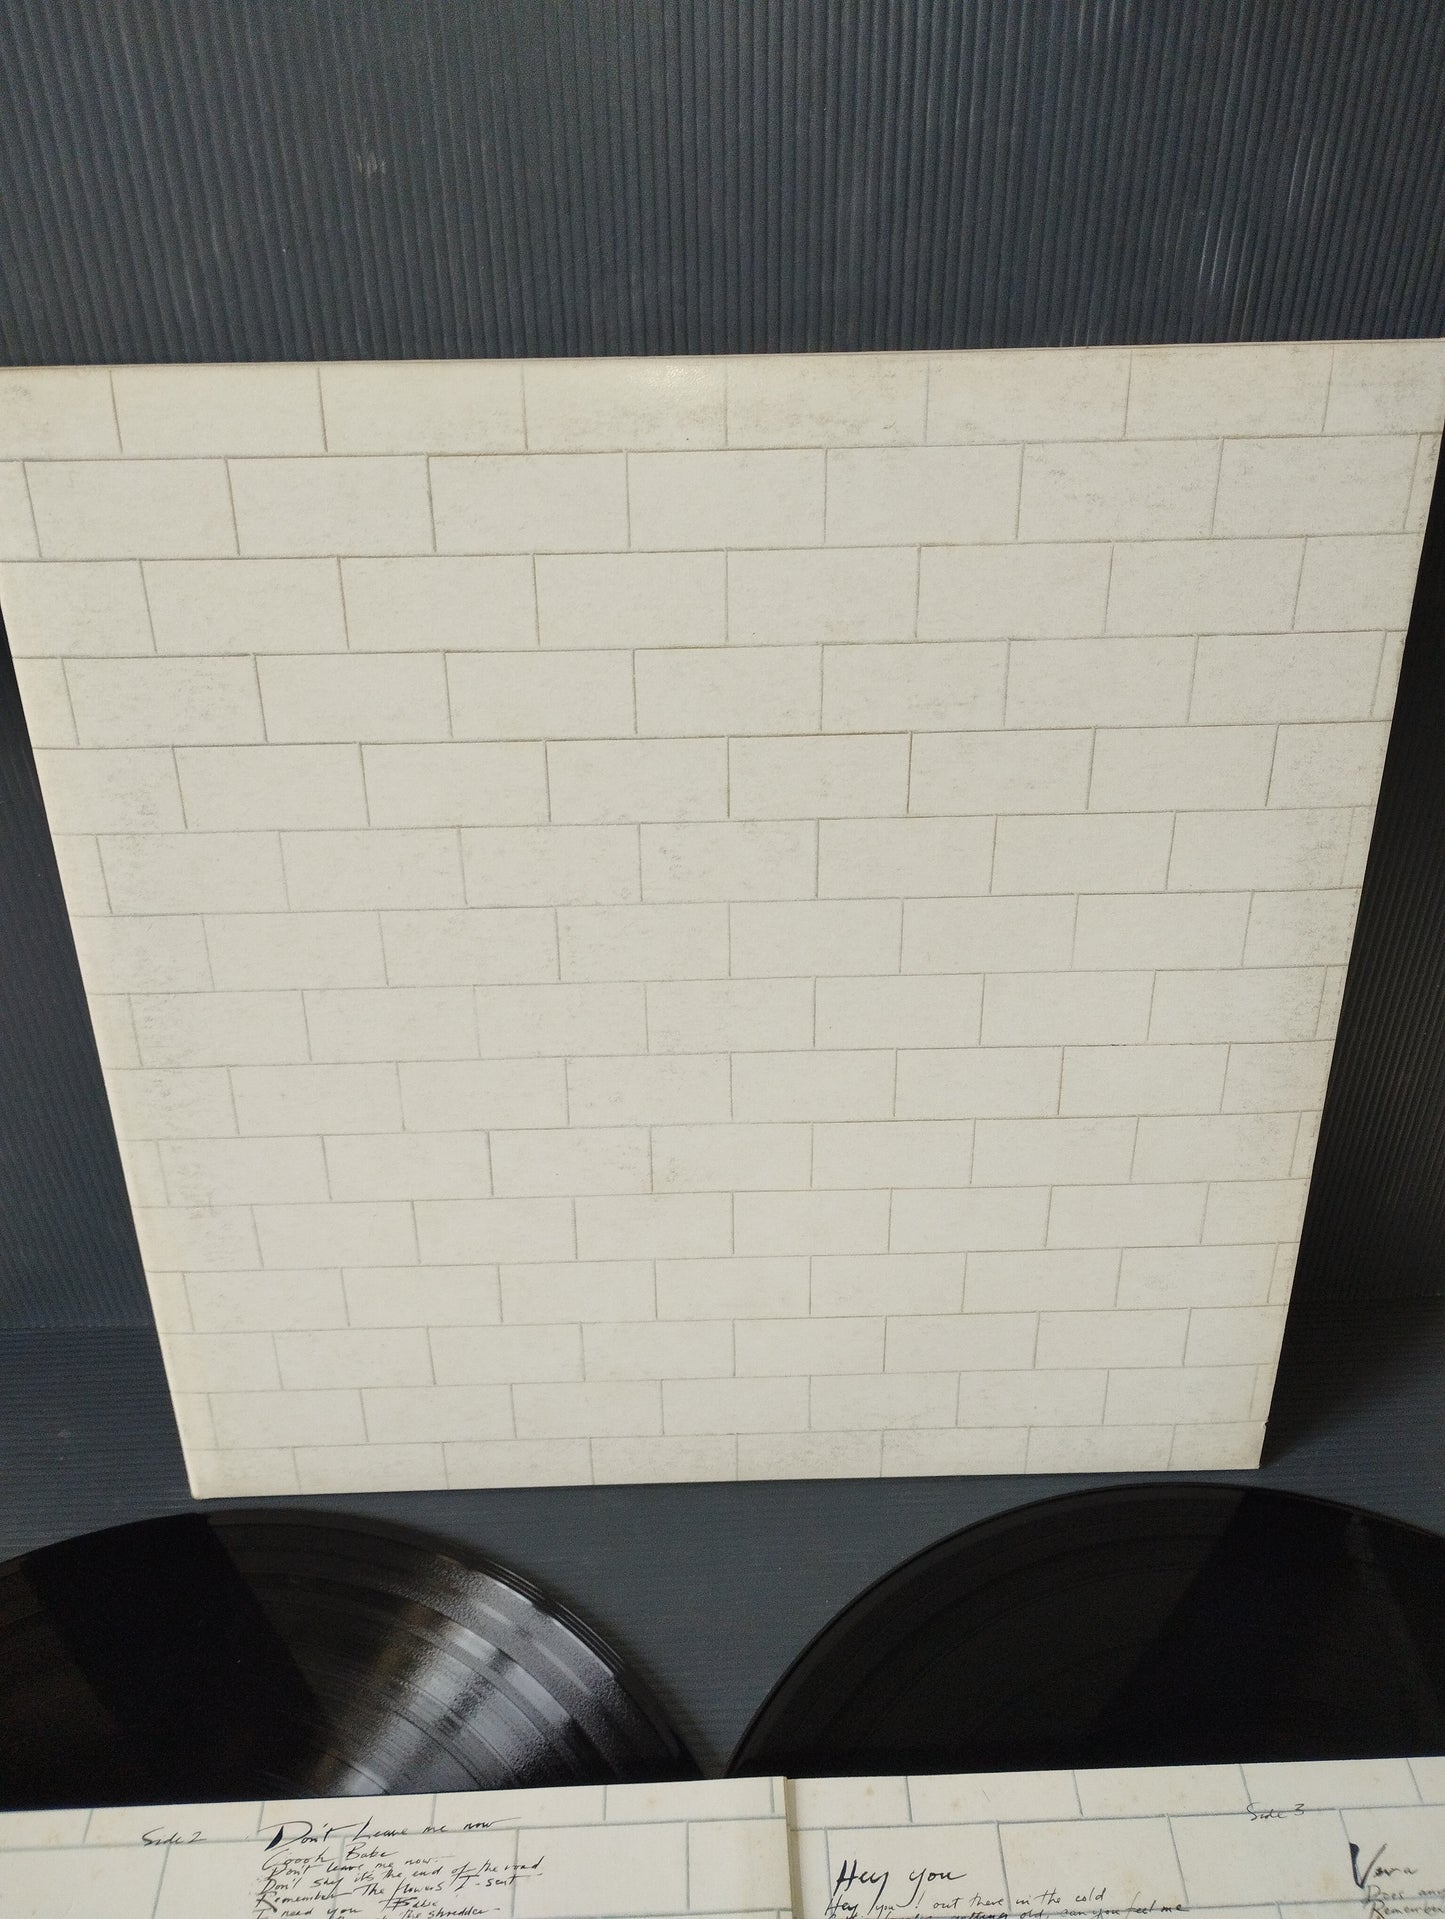 The Wall" Pink Floyd 2 Lp 33 Giri